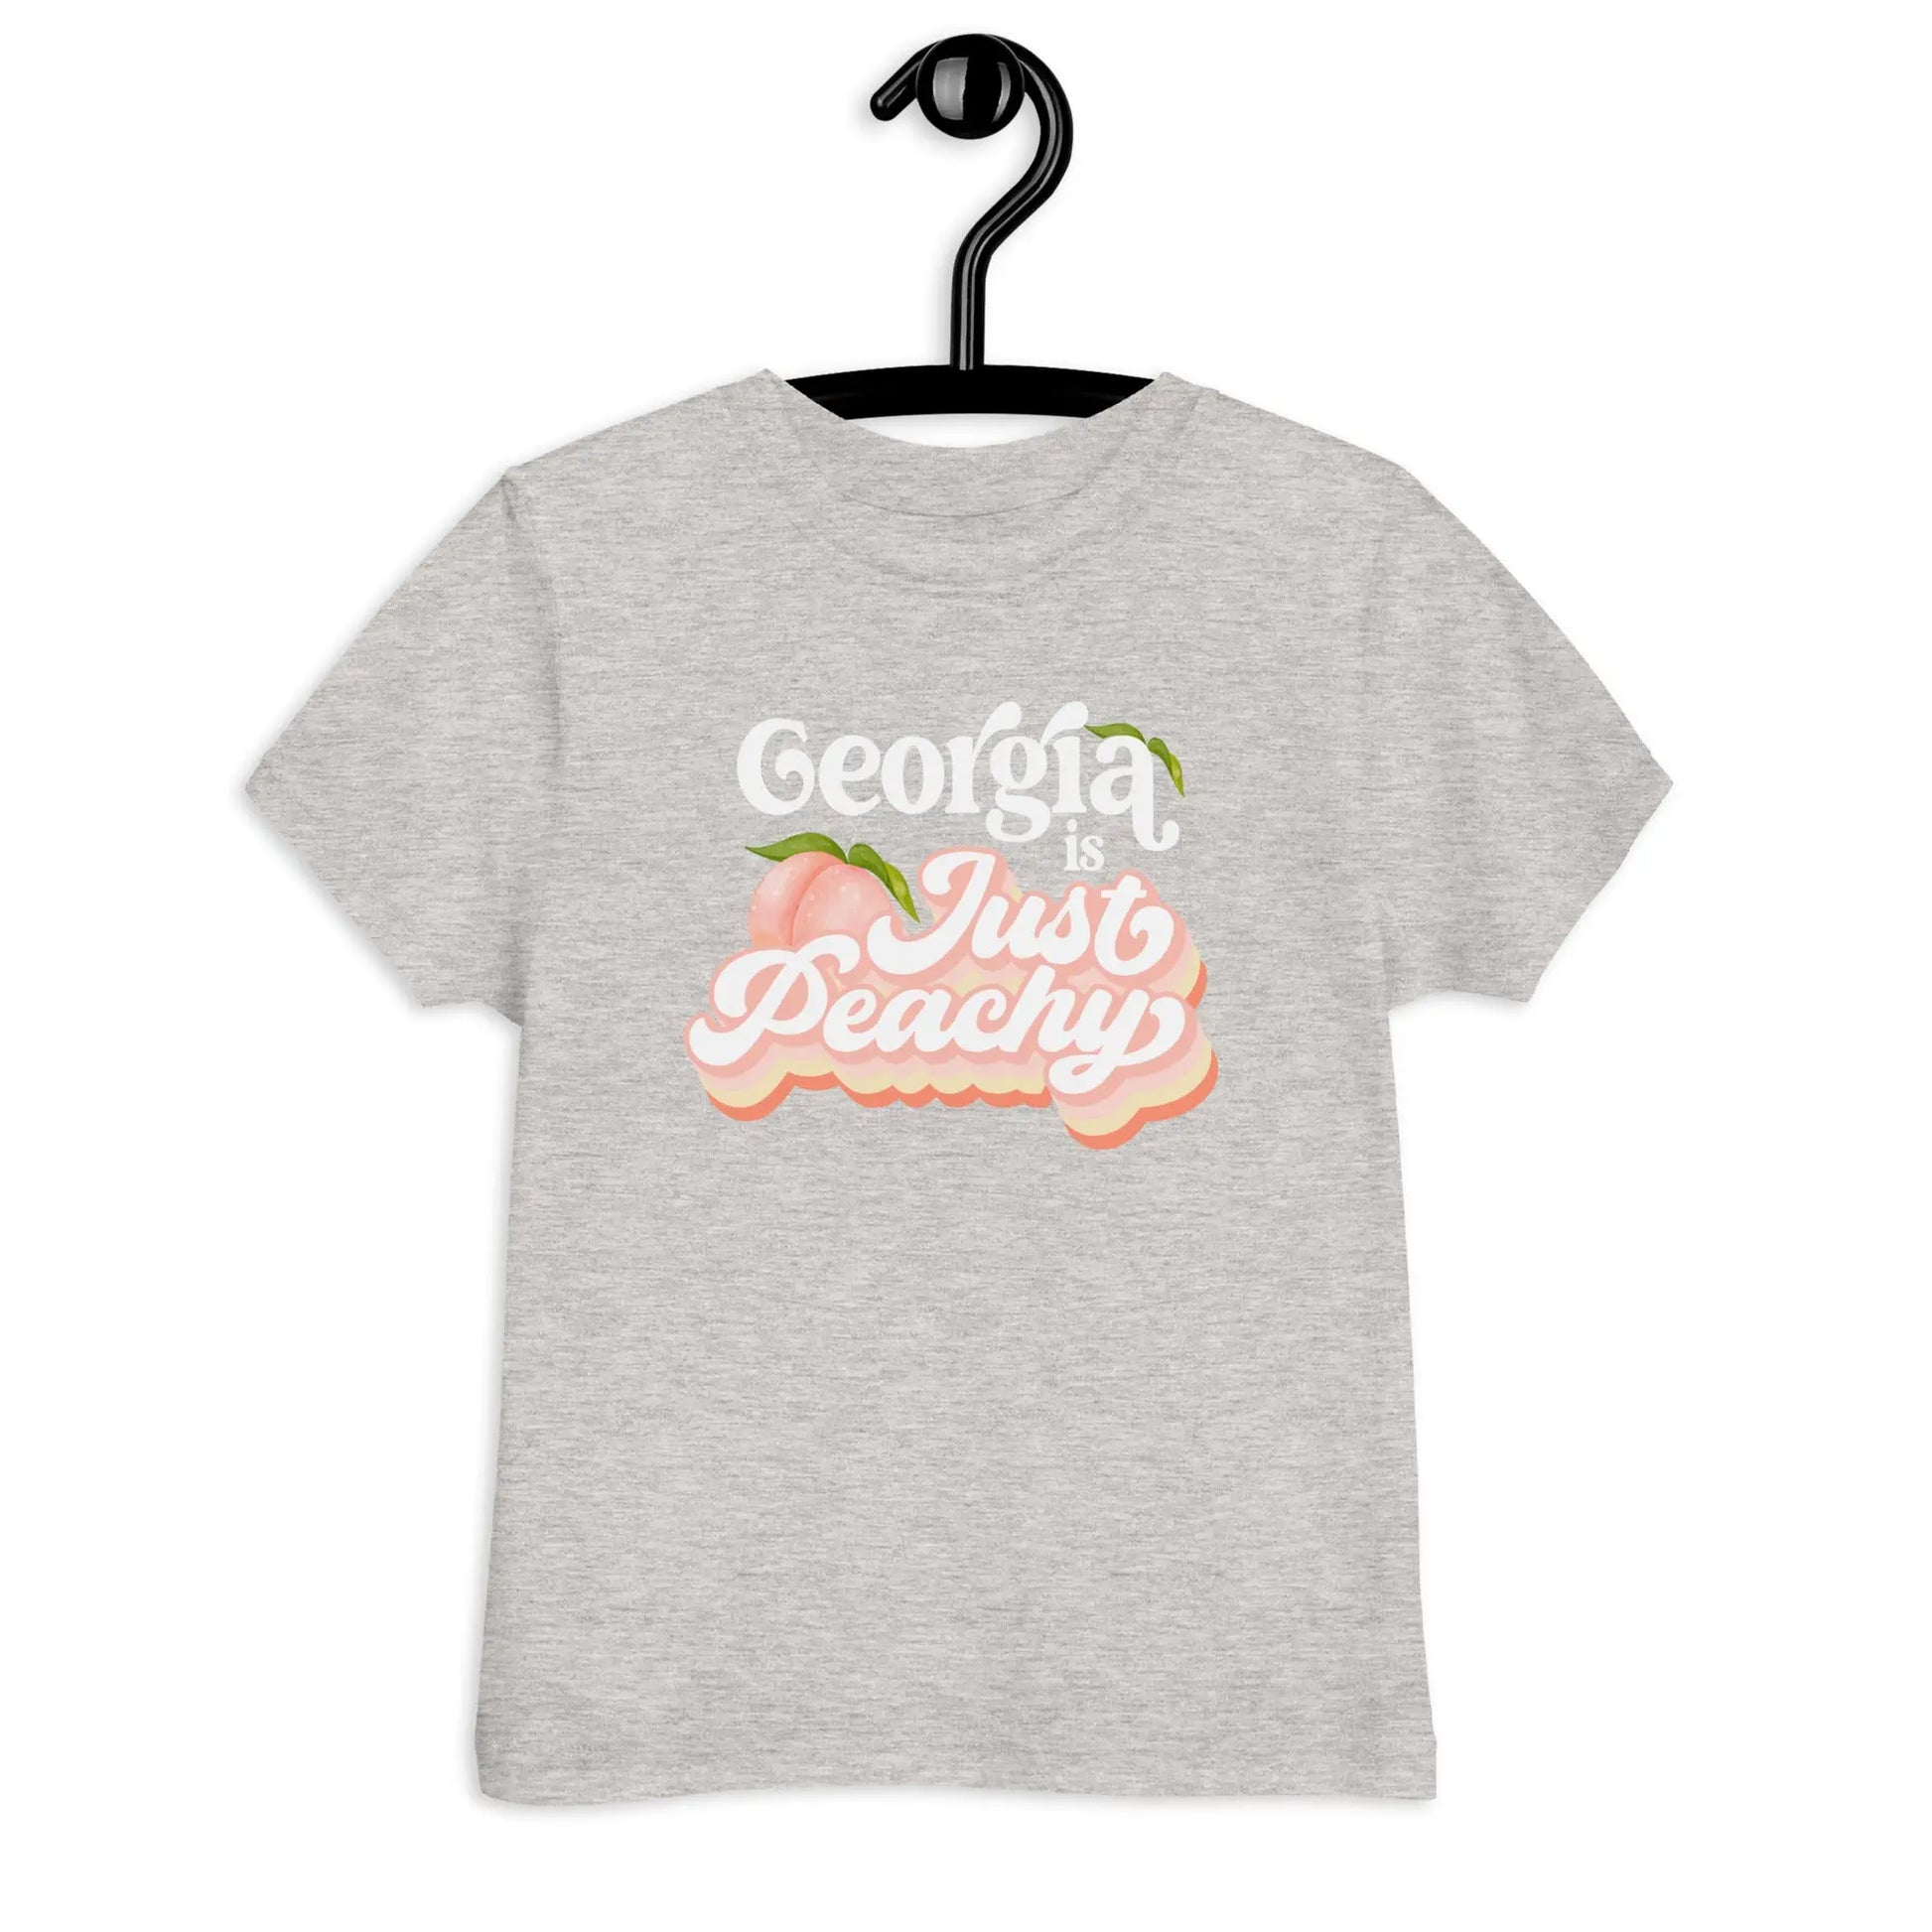 Georgia is Just Peachy Toddler t-shirt Amazing Faith Designs